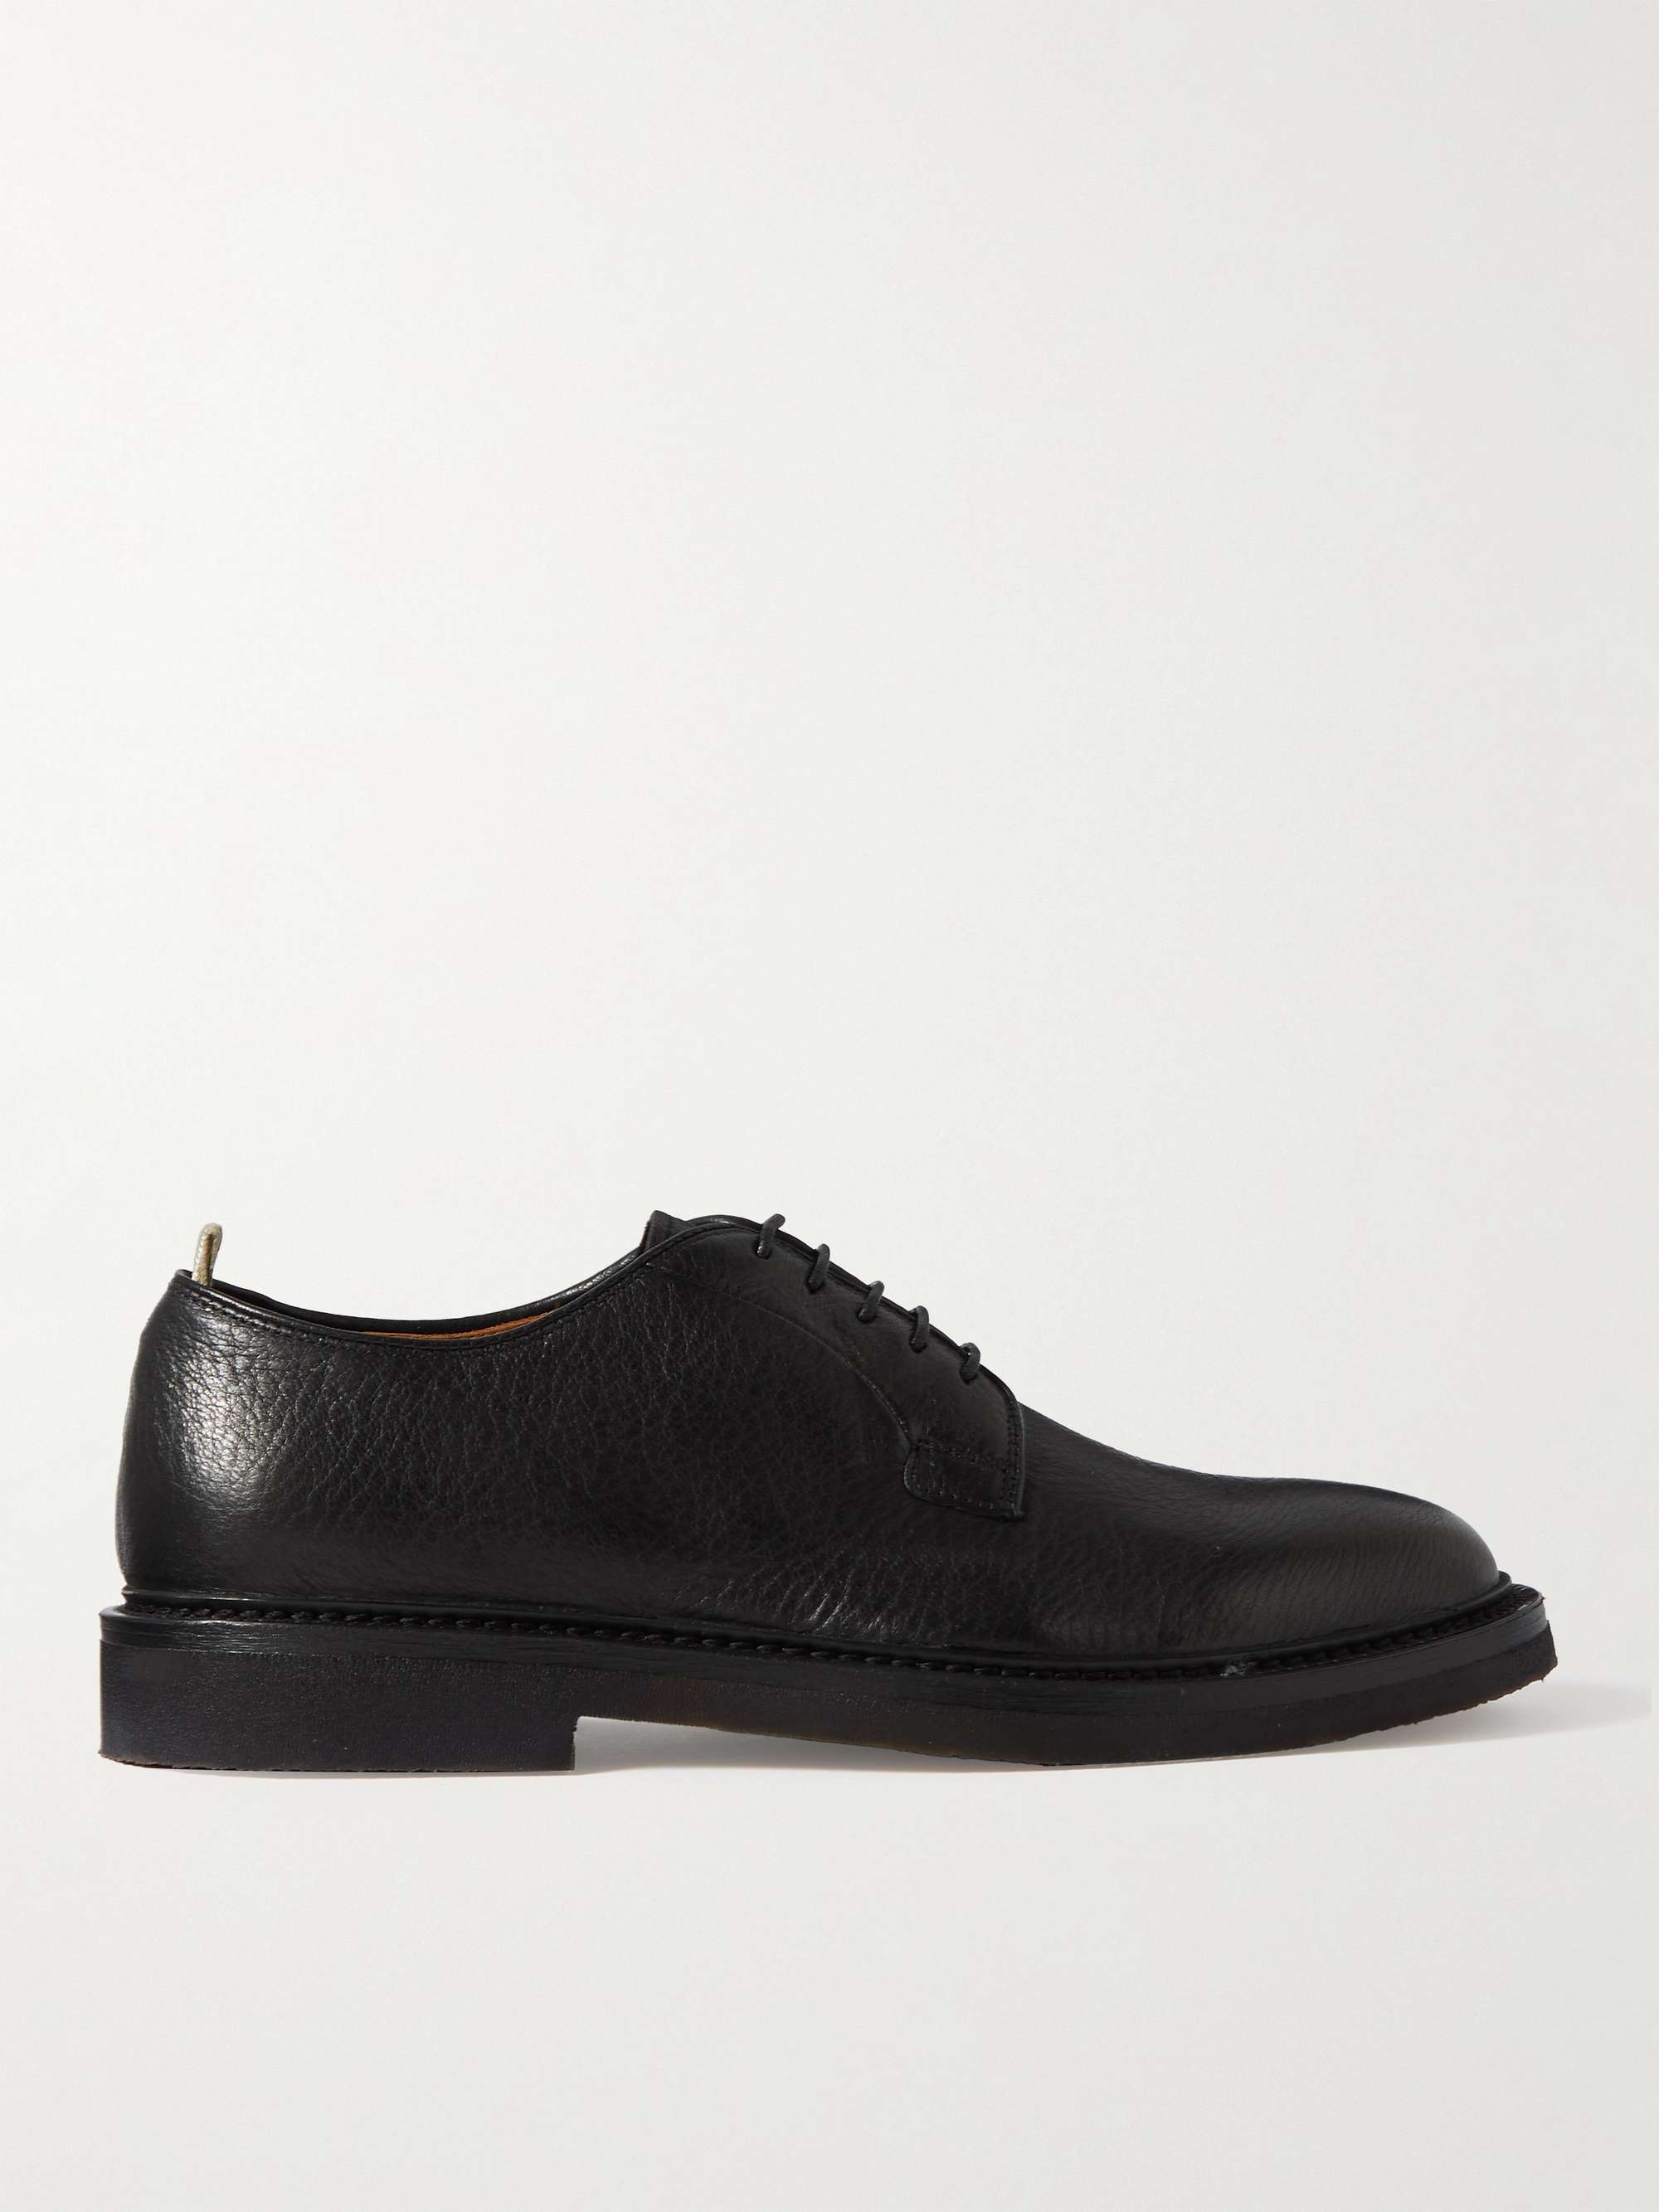 OFFICINE CREATIVE Hopkins Flex Full-Grain Leather Derby Shoes for Men ...